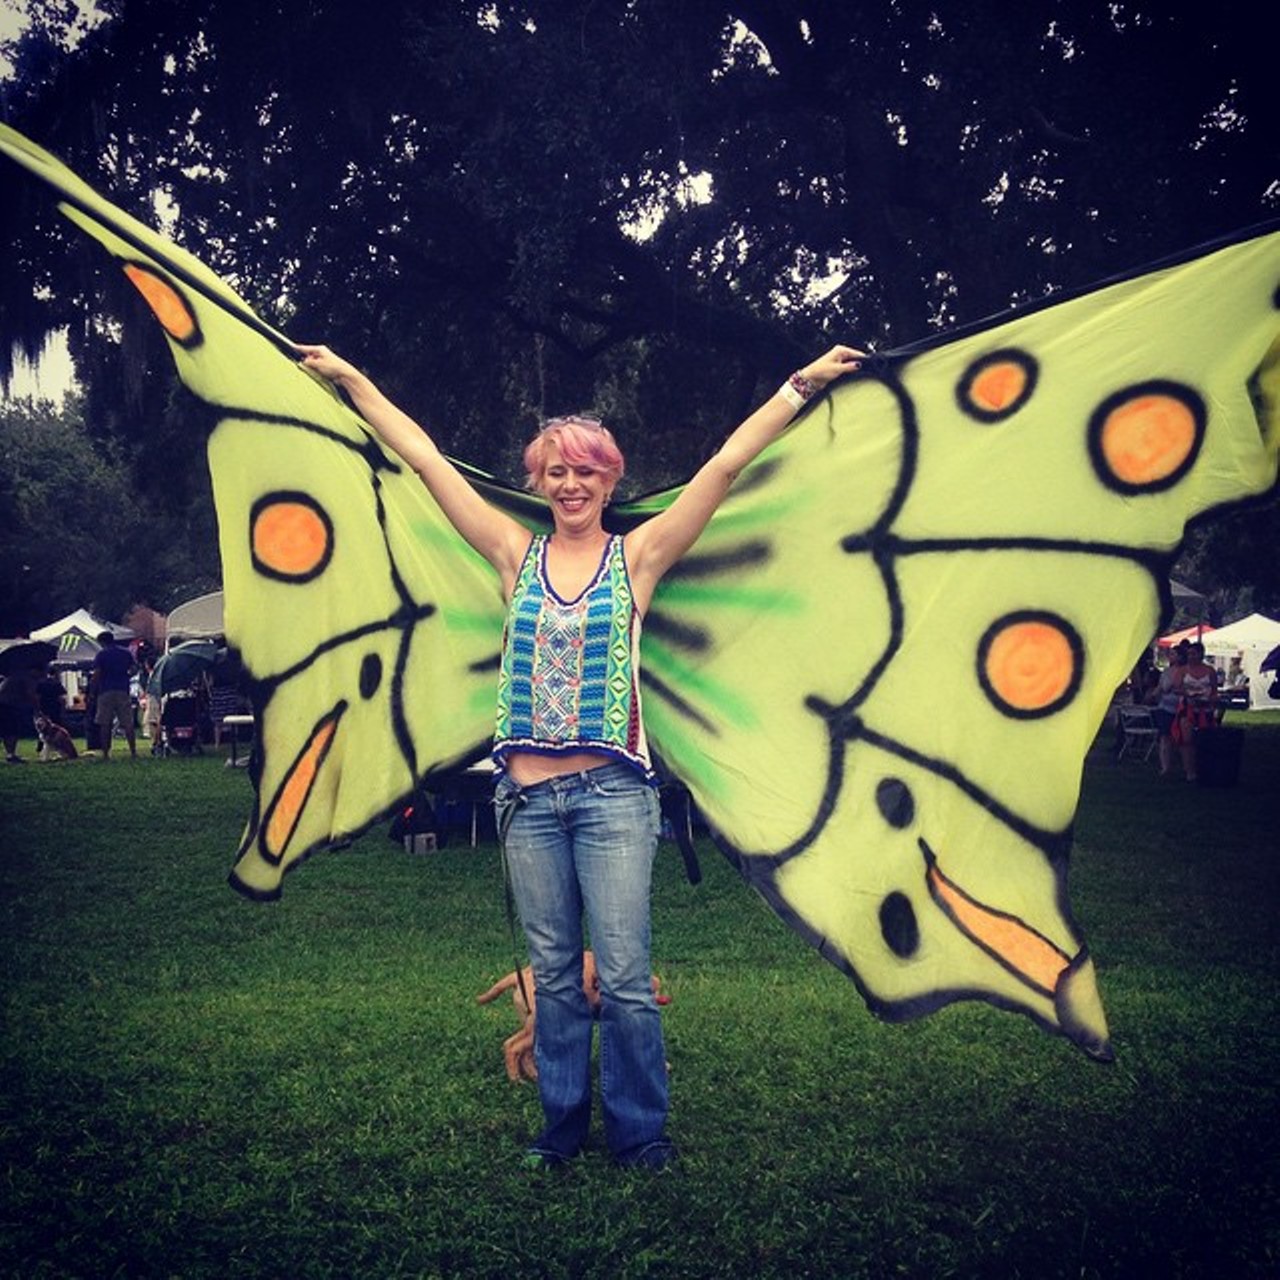 Butterfly wings at Artlando
Instagram: kels_coffman